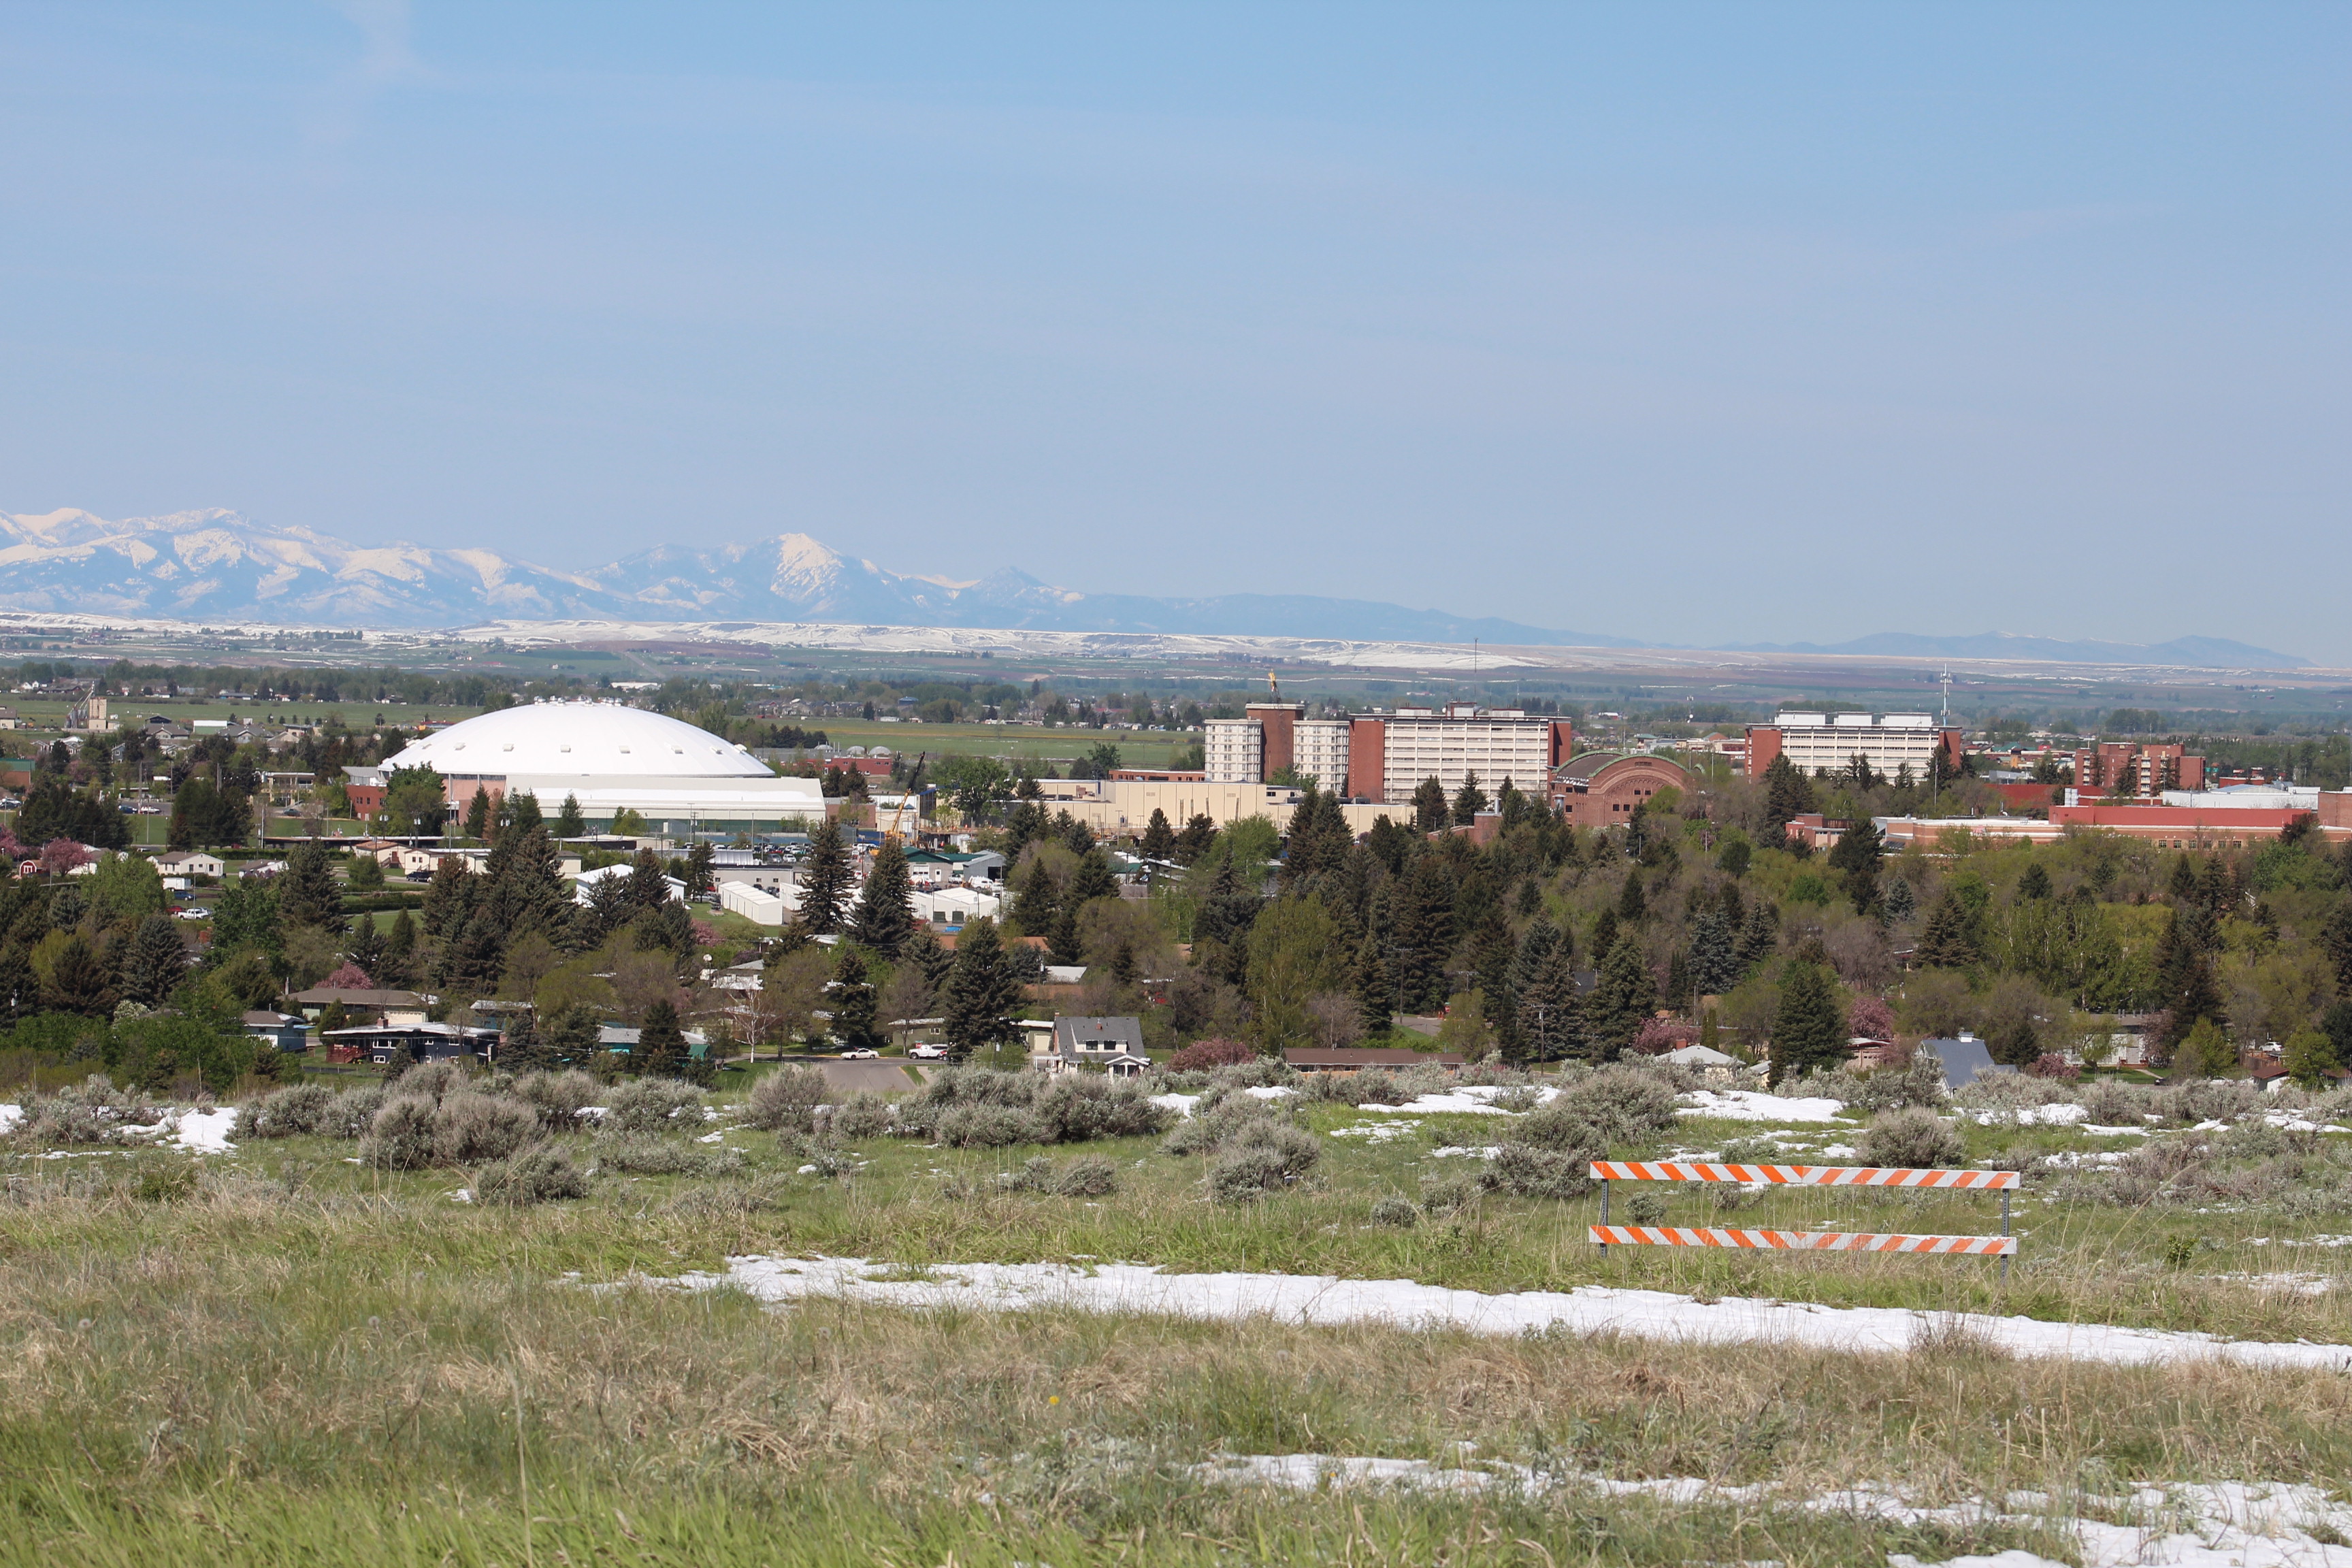 Montana State University Opportunity Zones